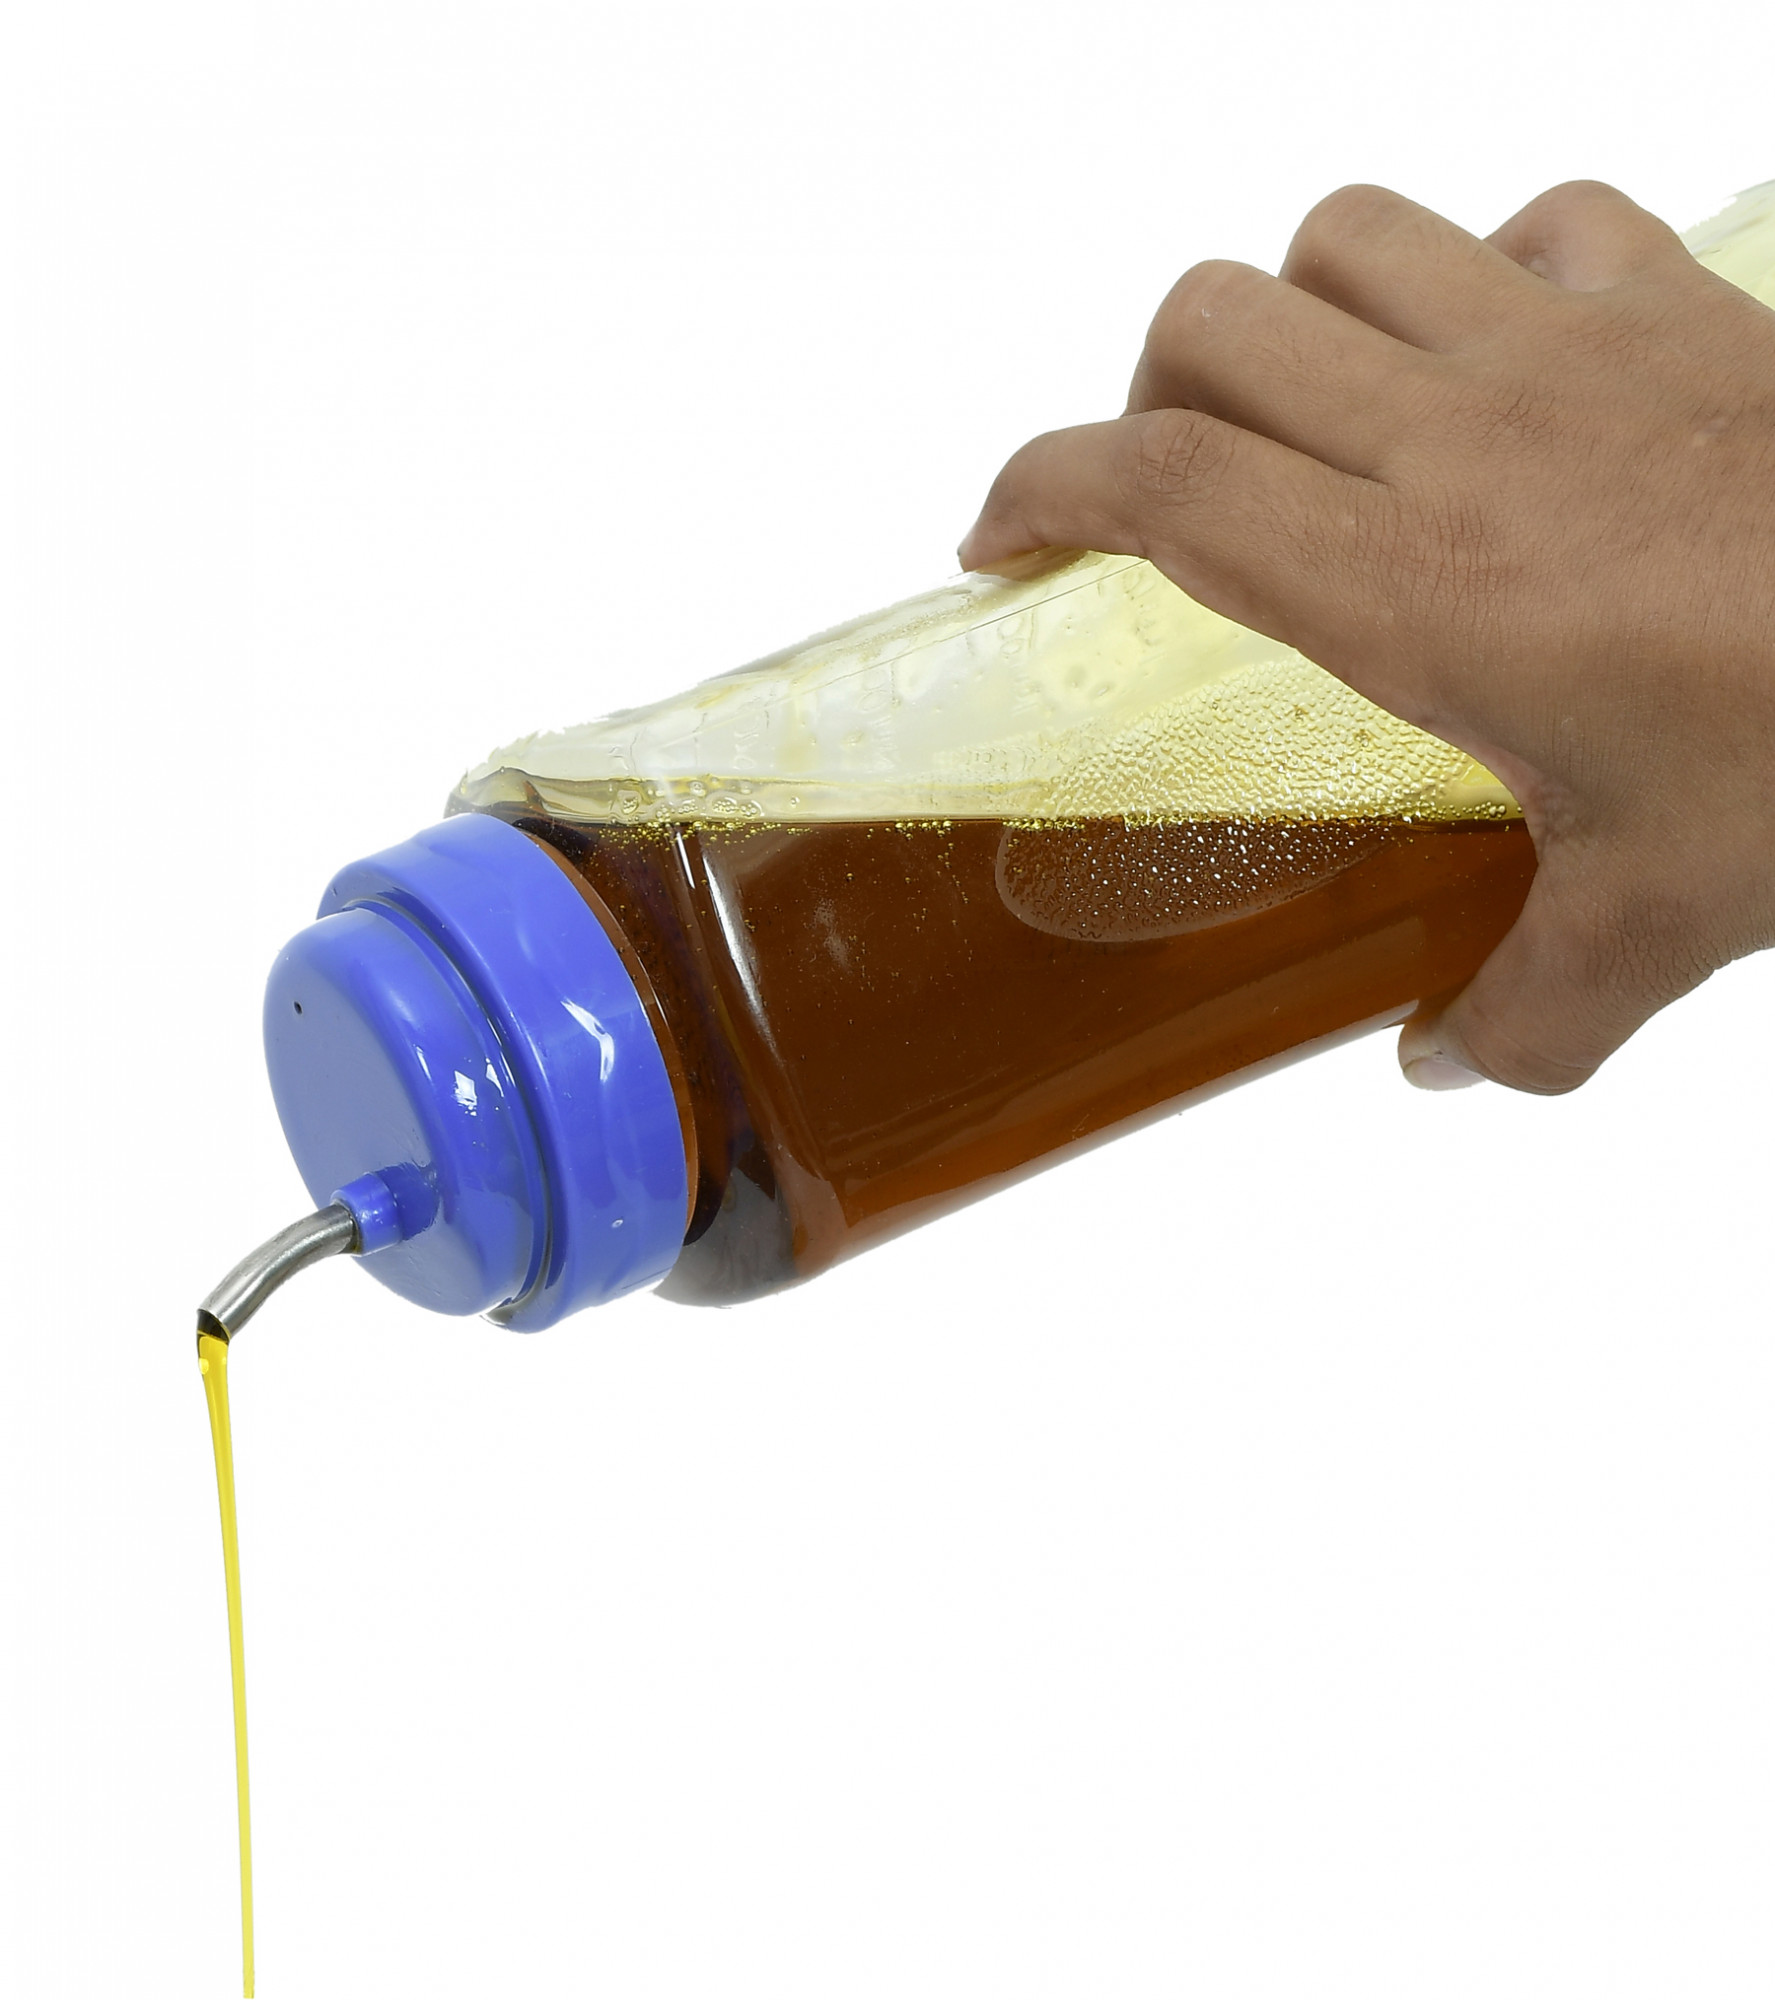 Kuber Industries Plastic Leakproof Drop Oil Bottle Olive Oil Dispenser for Kitchen Storage Container,1 Ltr (Purple)